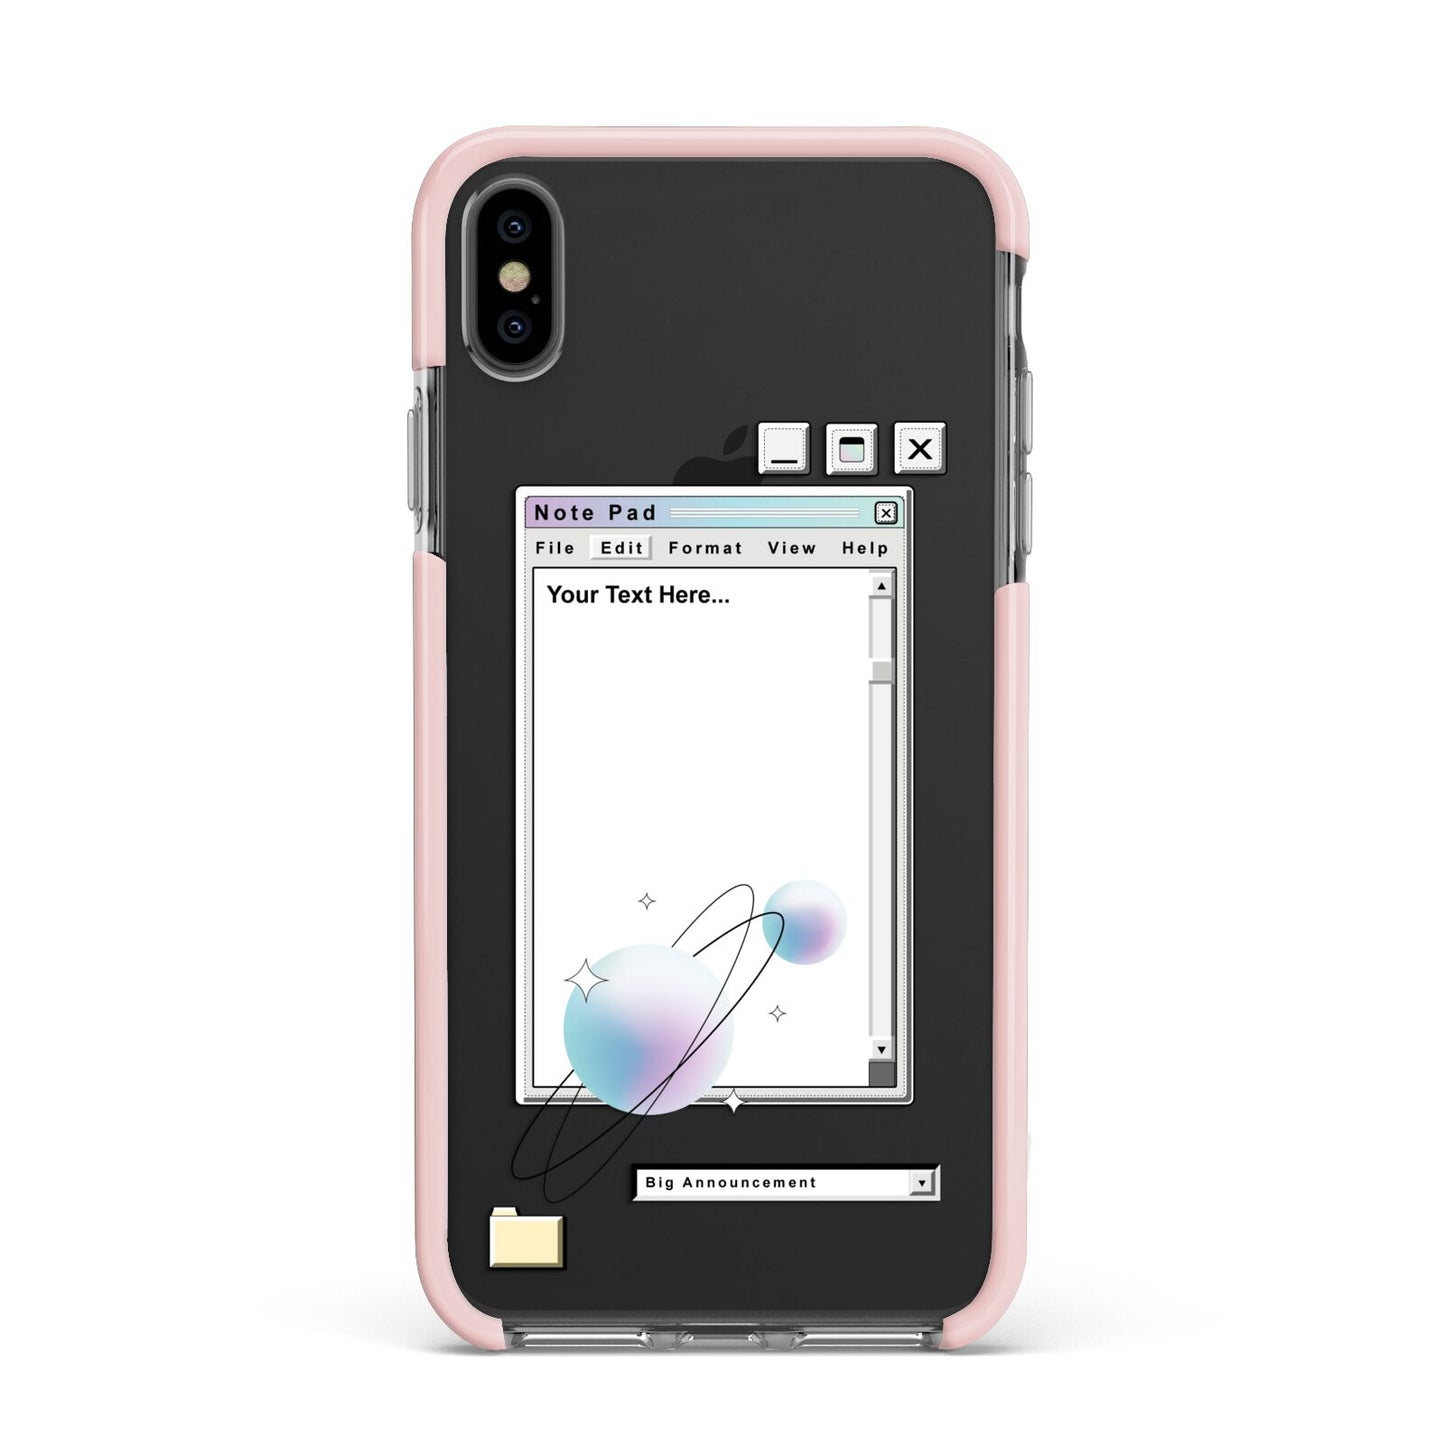 Retro Note Pad Apple iPhone Xs Max Impact Case Pink Edge on Black Phone